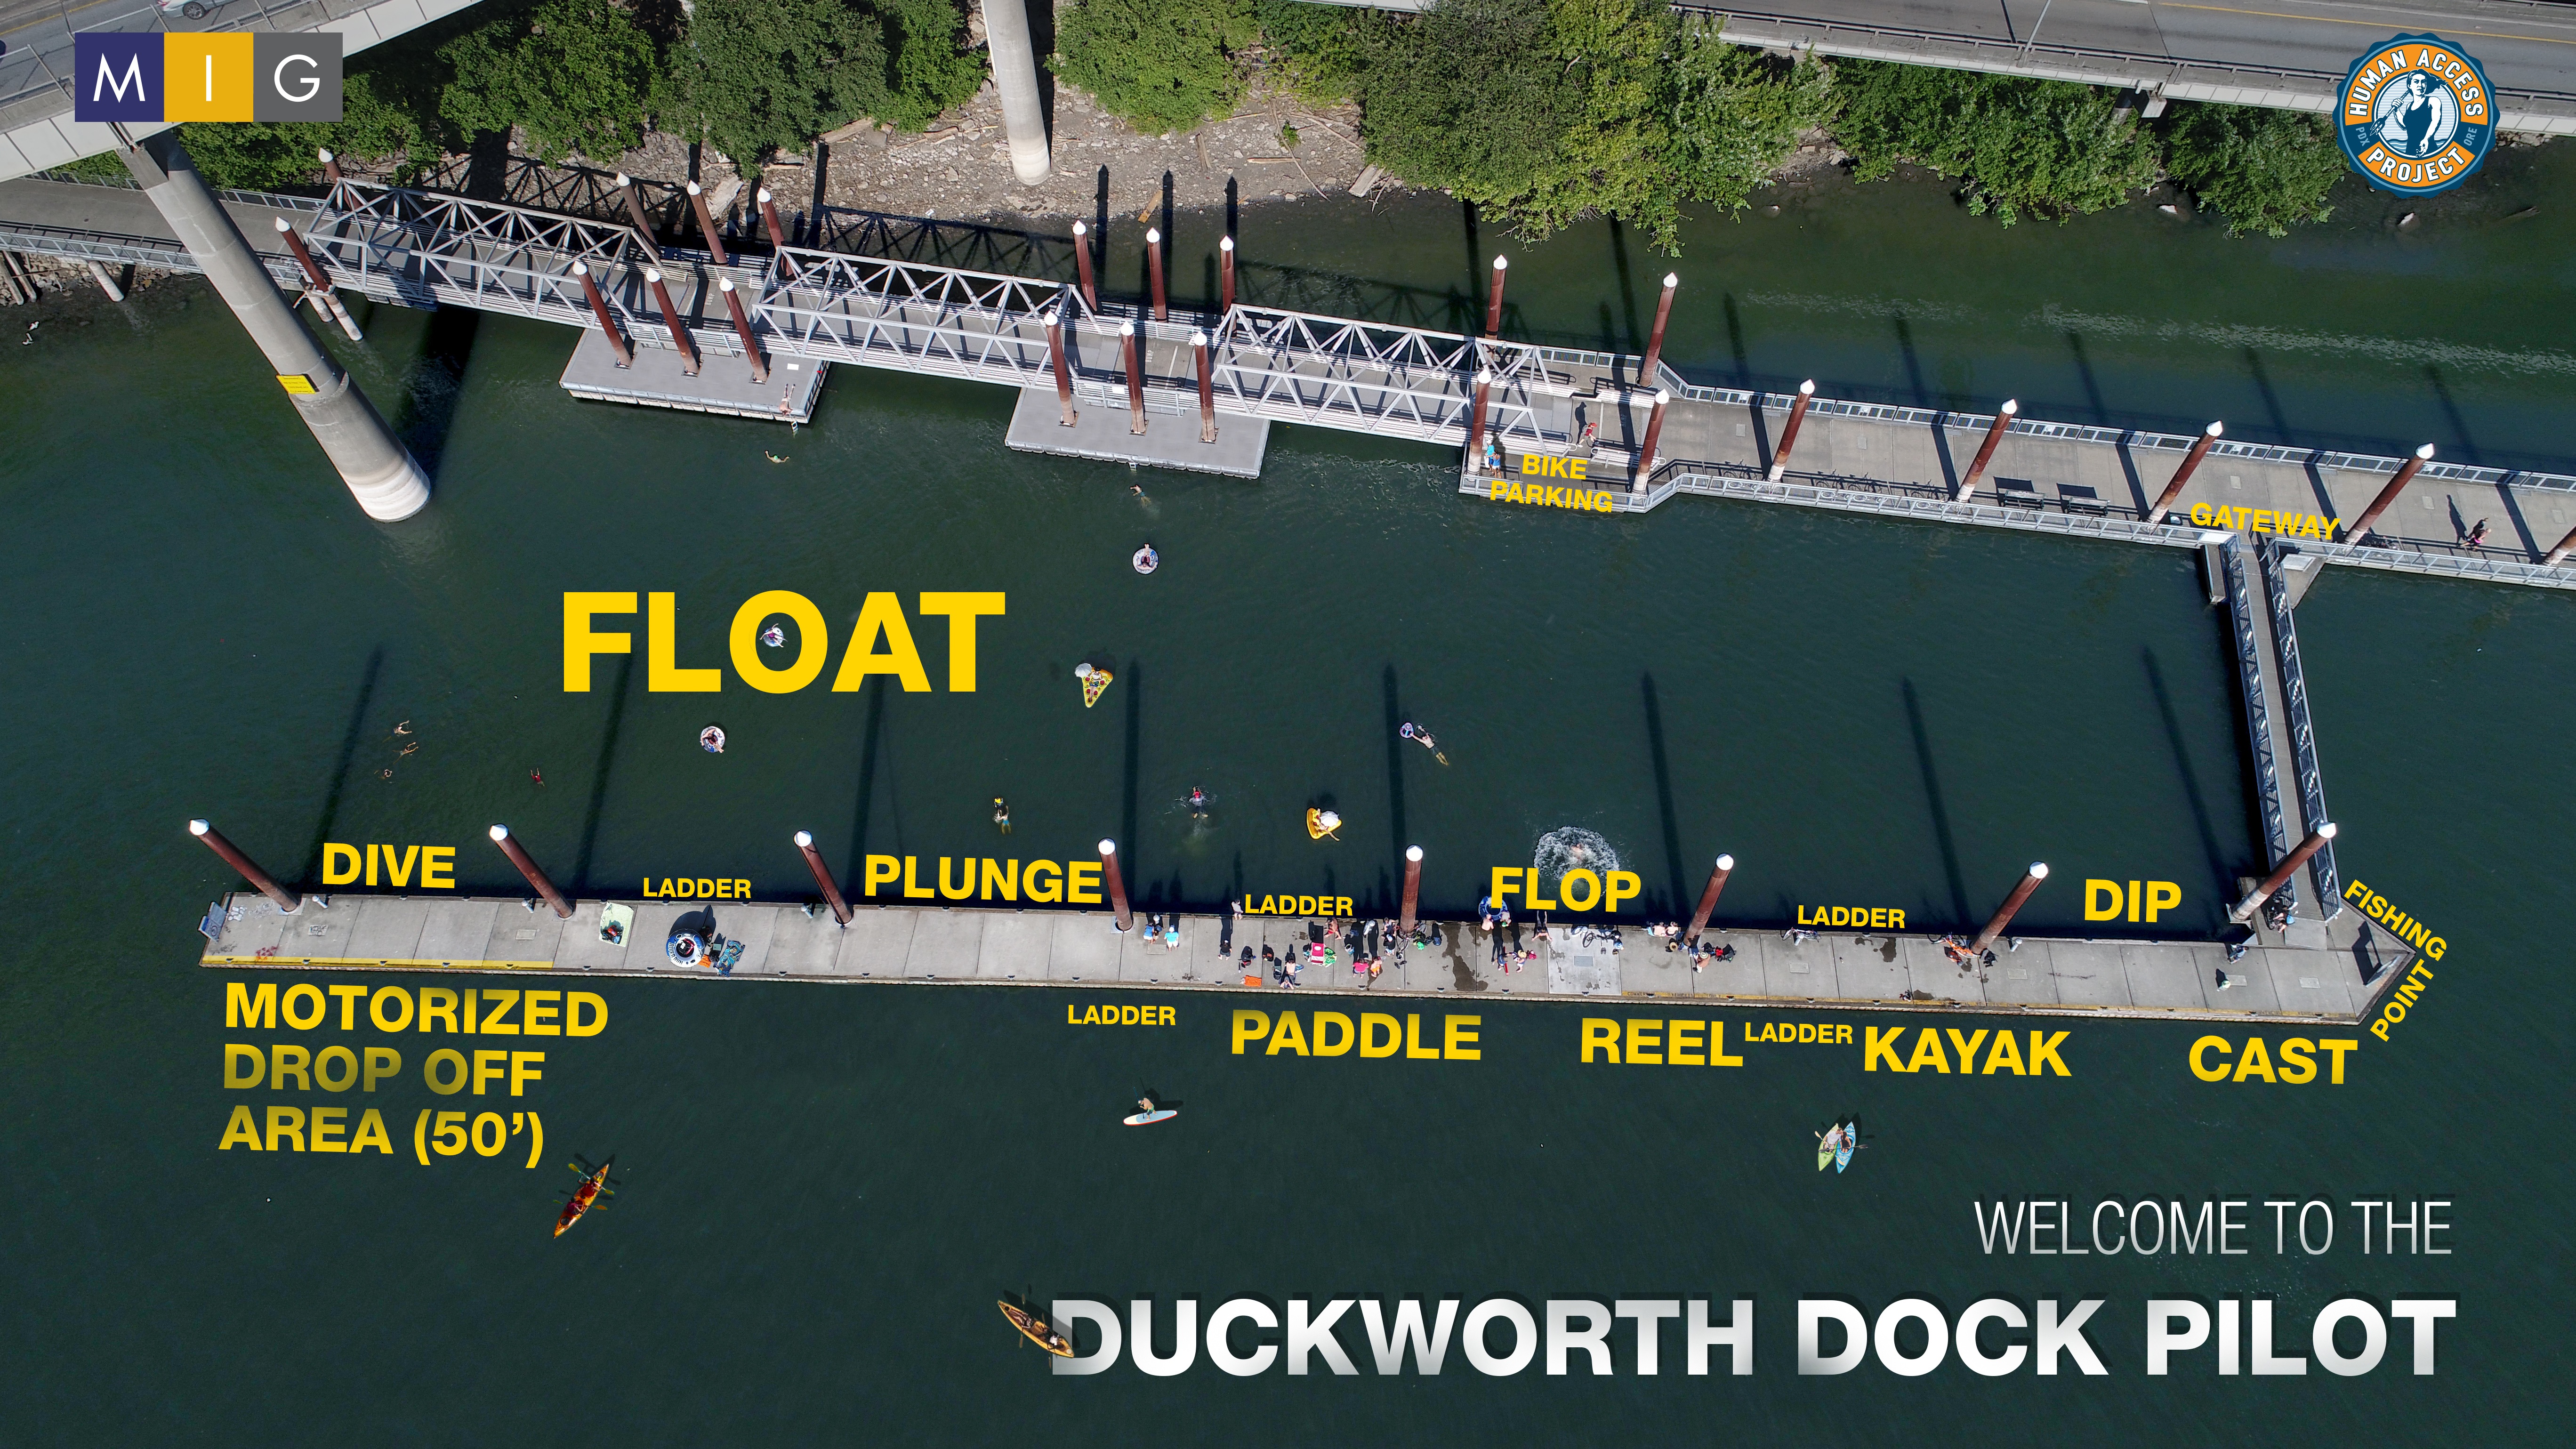 Kevin Duckworth Dock - Phase I Pilot